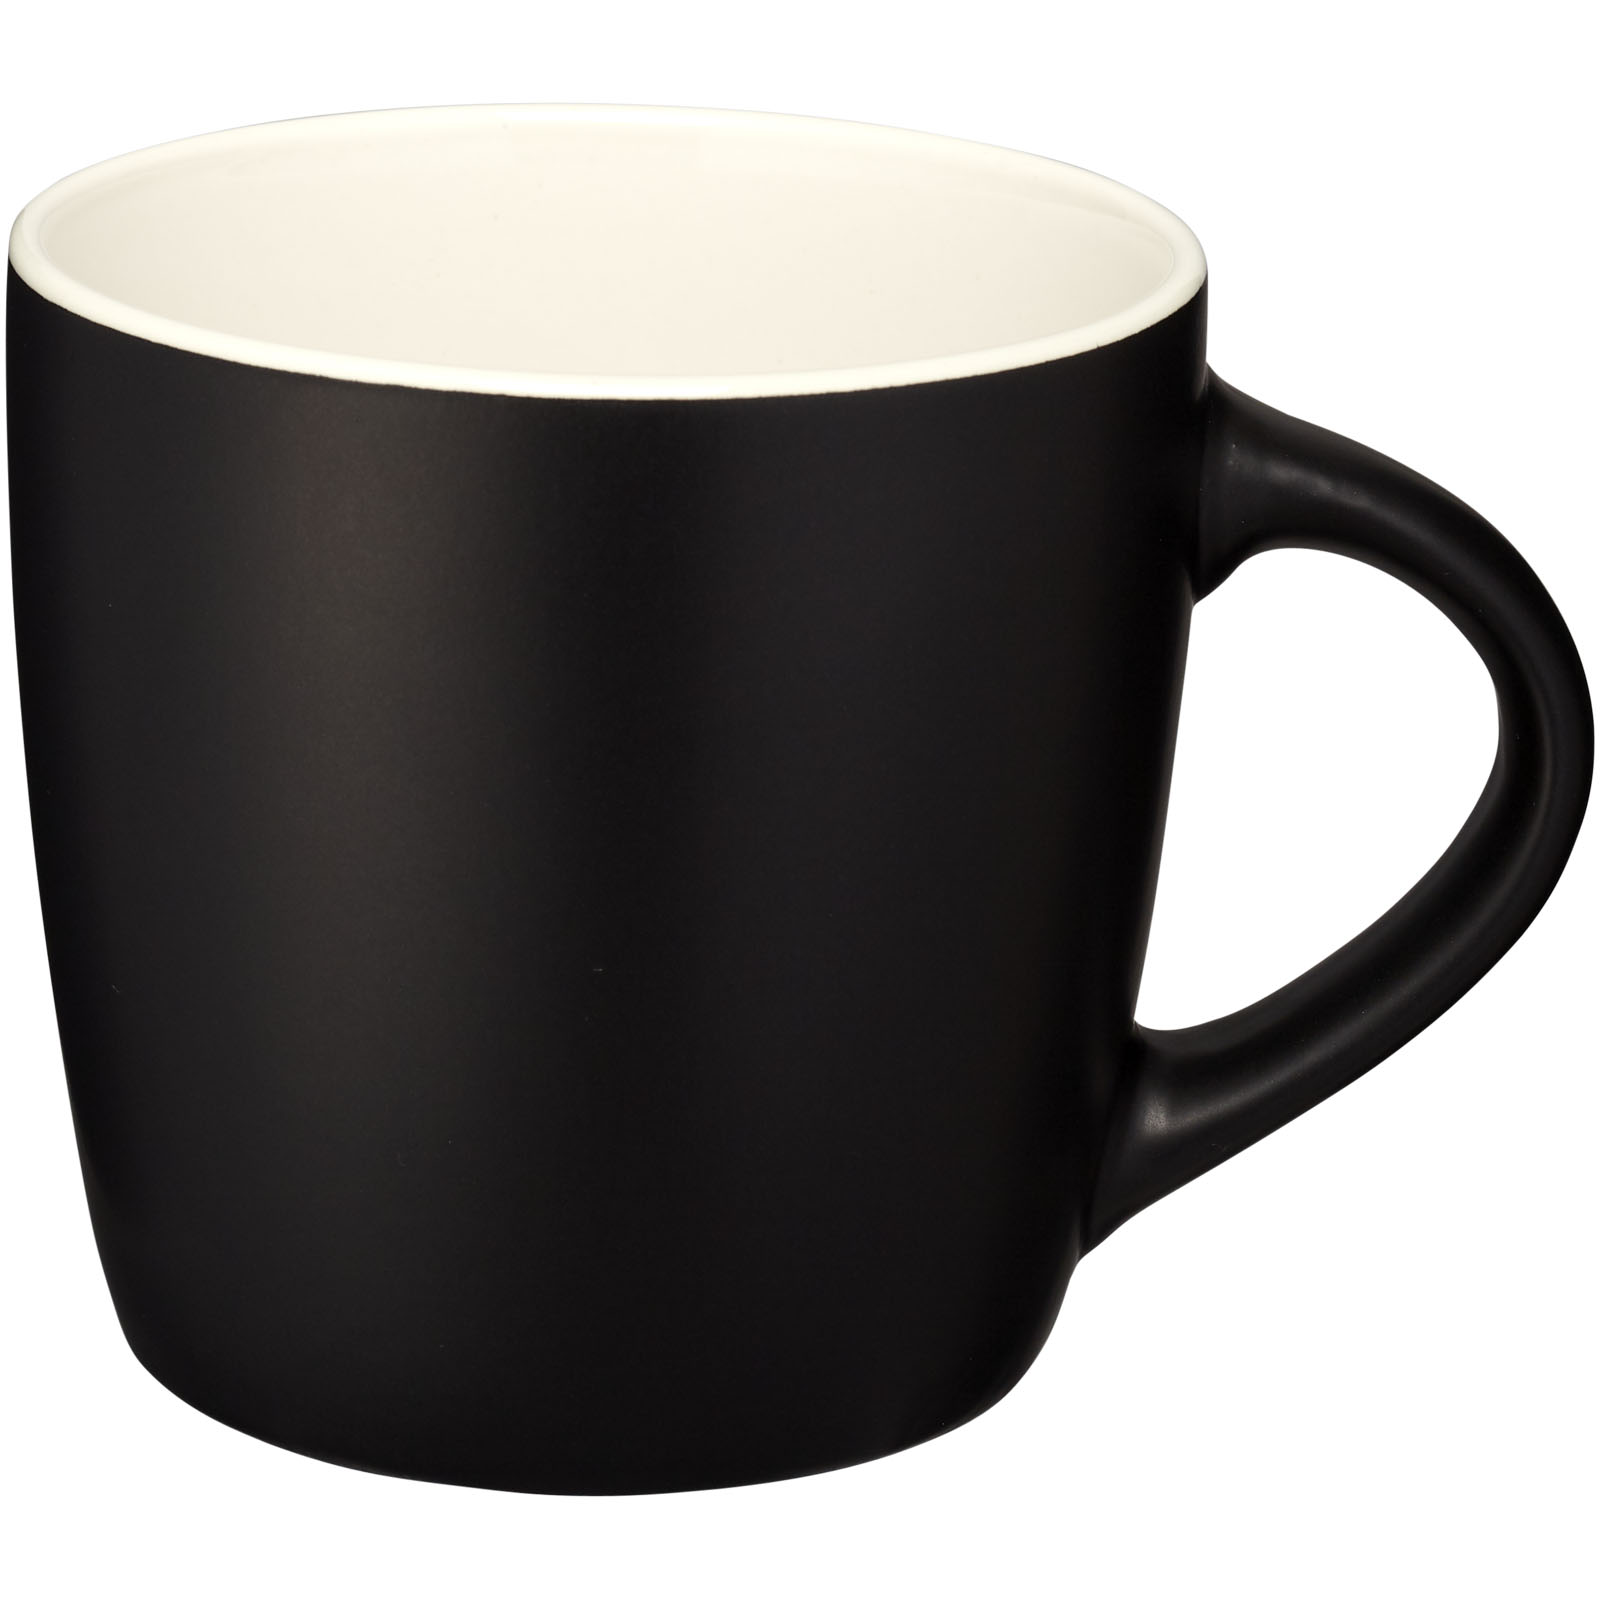 Standard mugs - Riviera 340 ml ceramic mug